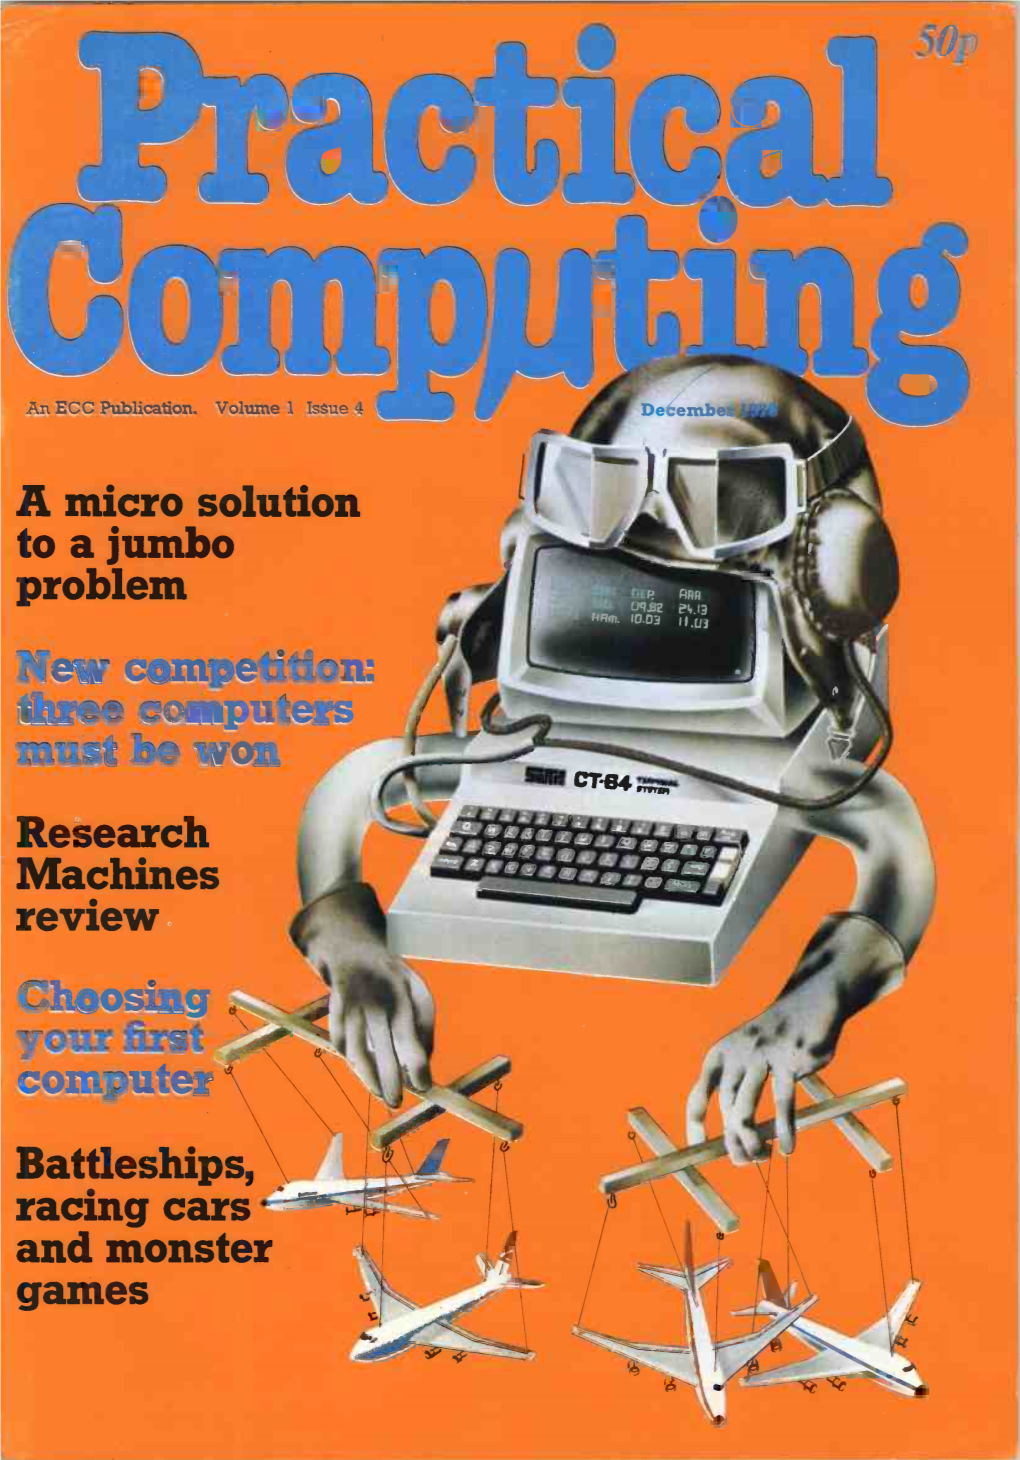 Practical-Computing